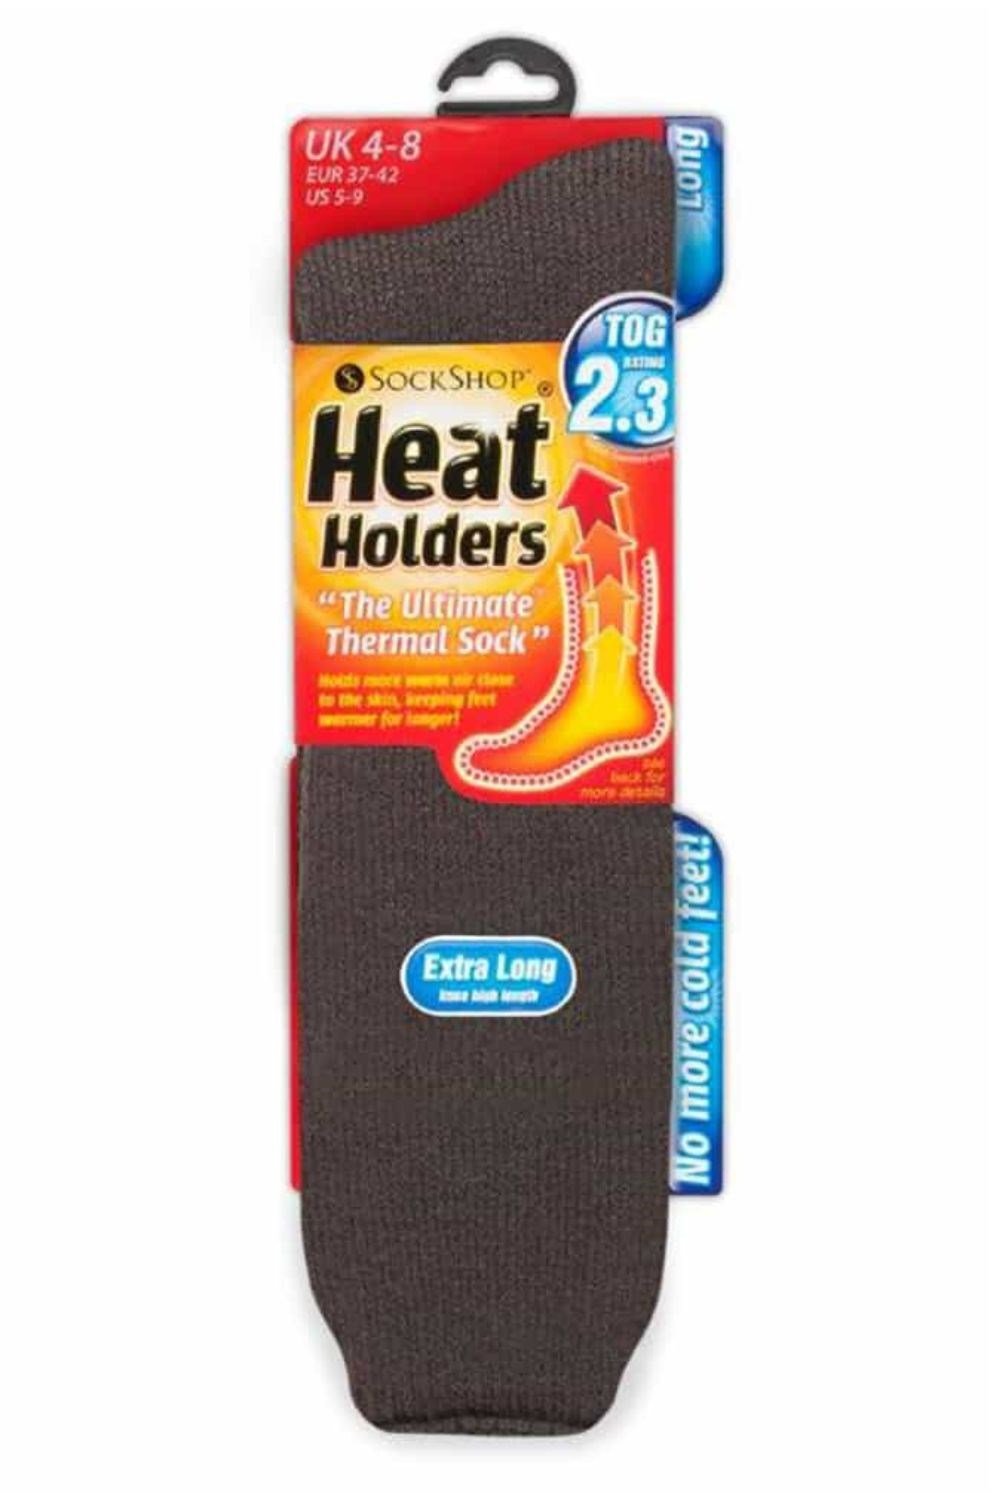 Heat Holders - Mens Womens Childrens Original 2.3 TOG Ultimate Thermal Socks